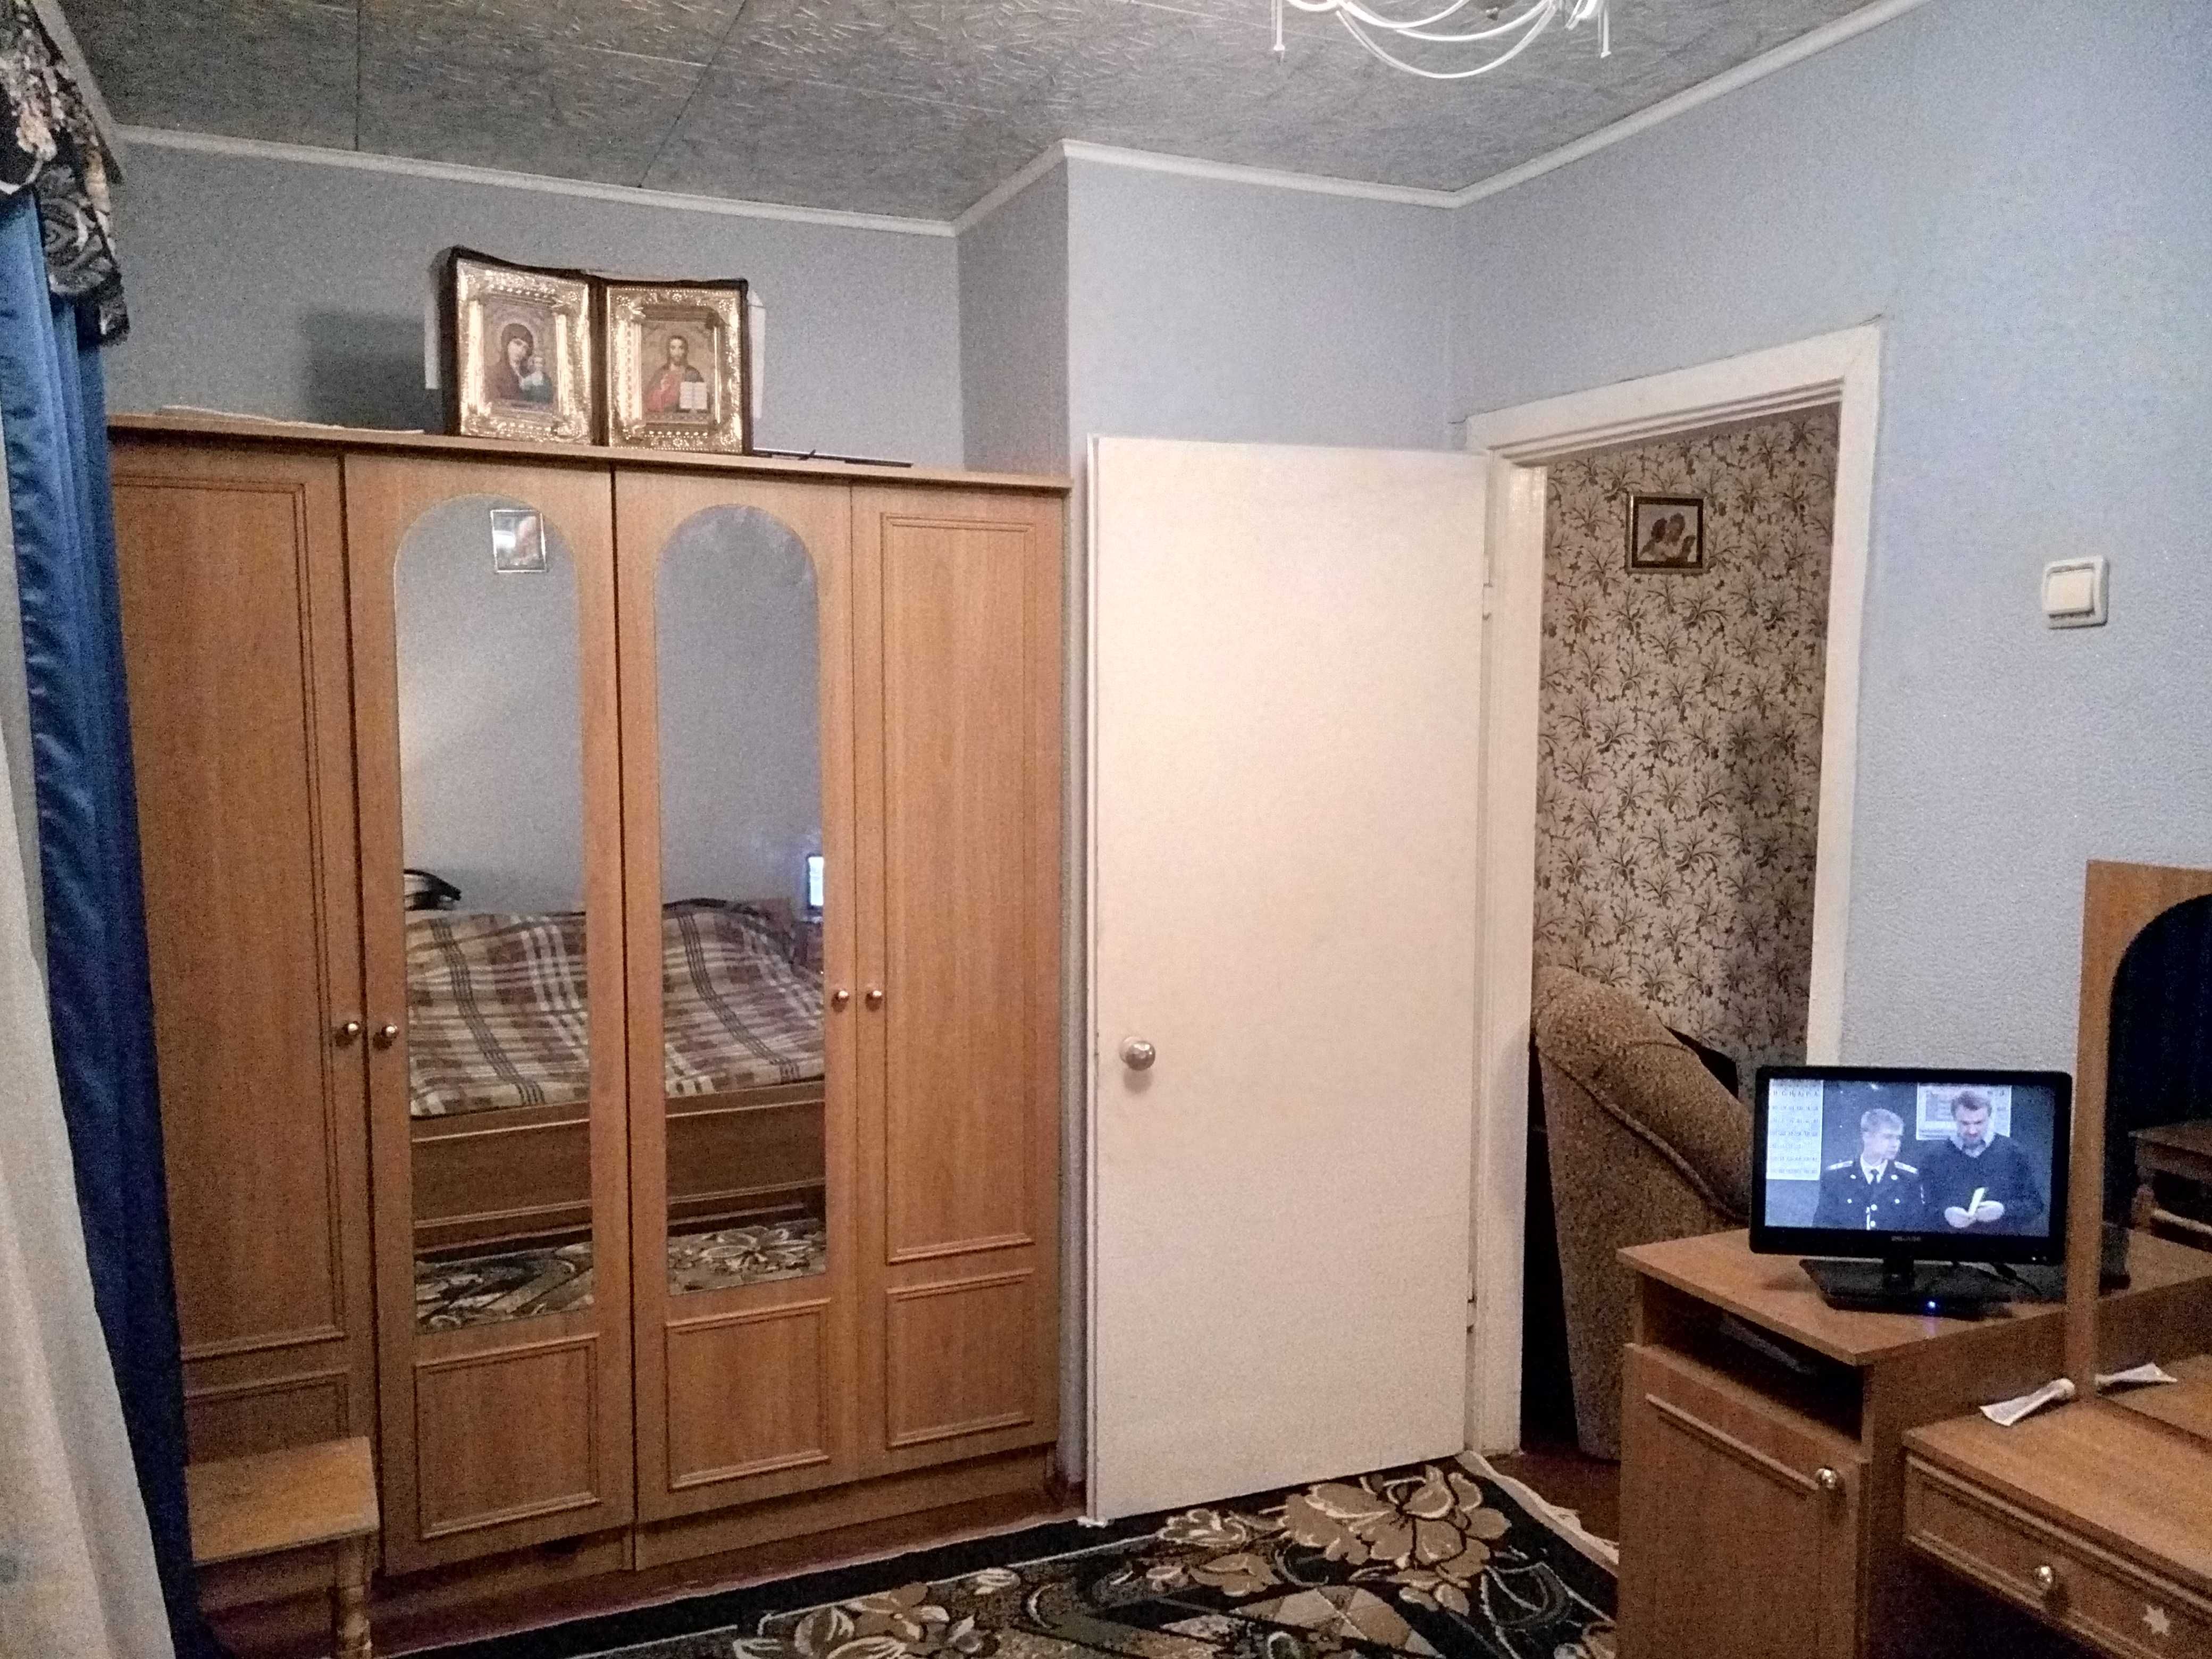 Сдам 2-х комнатную квартиру на военном городке. Цена 5000. грн